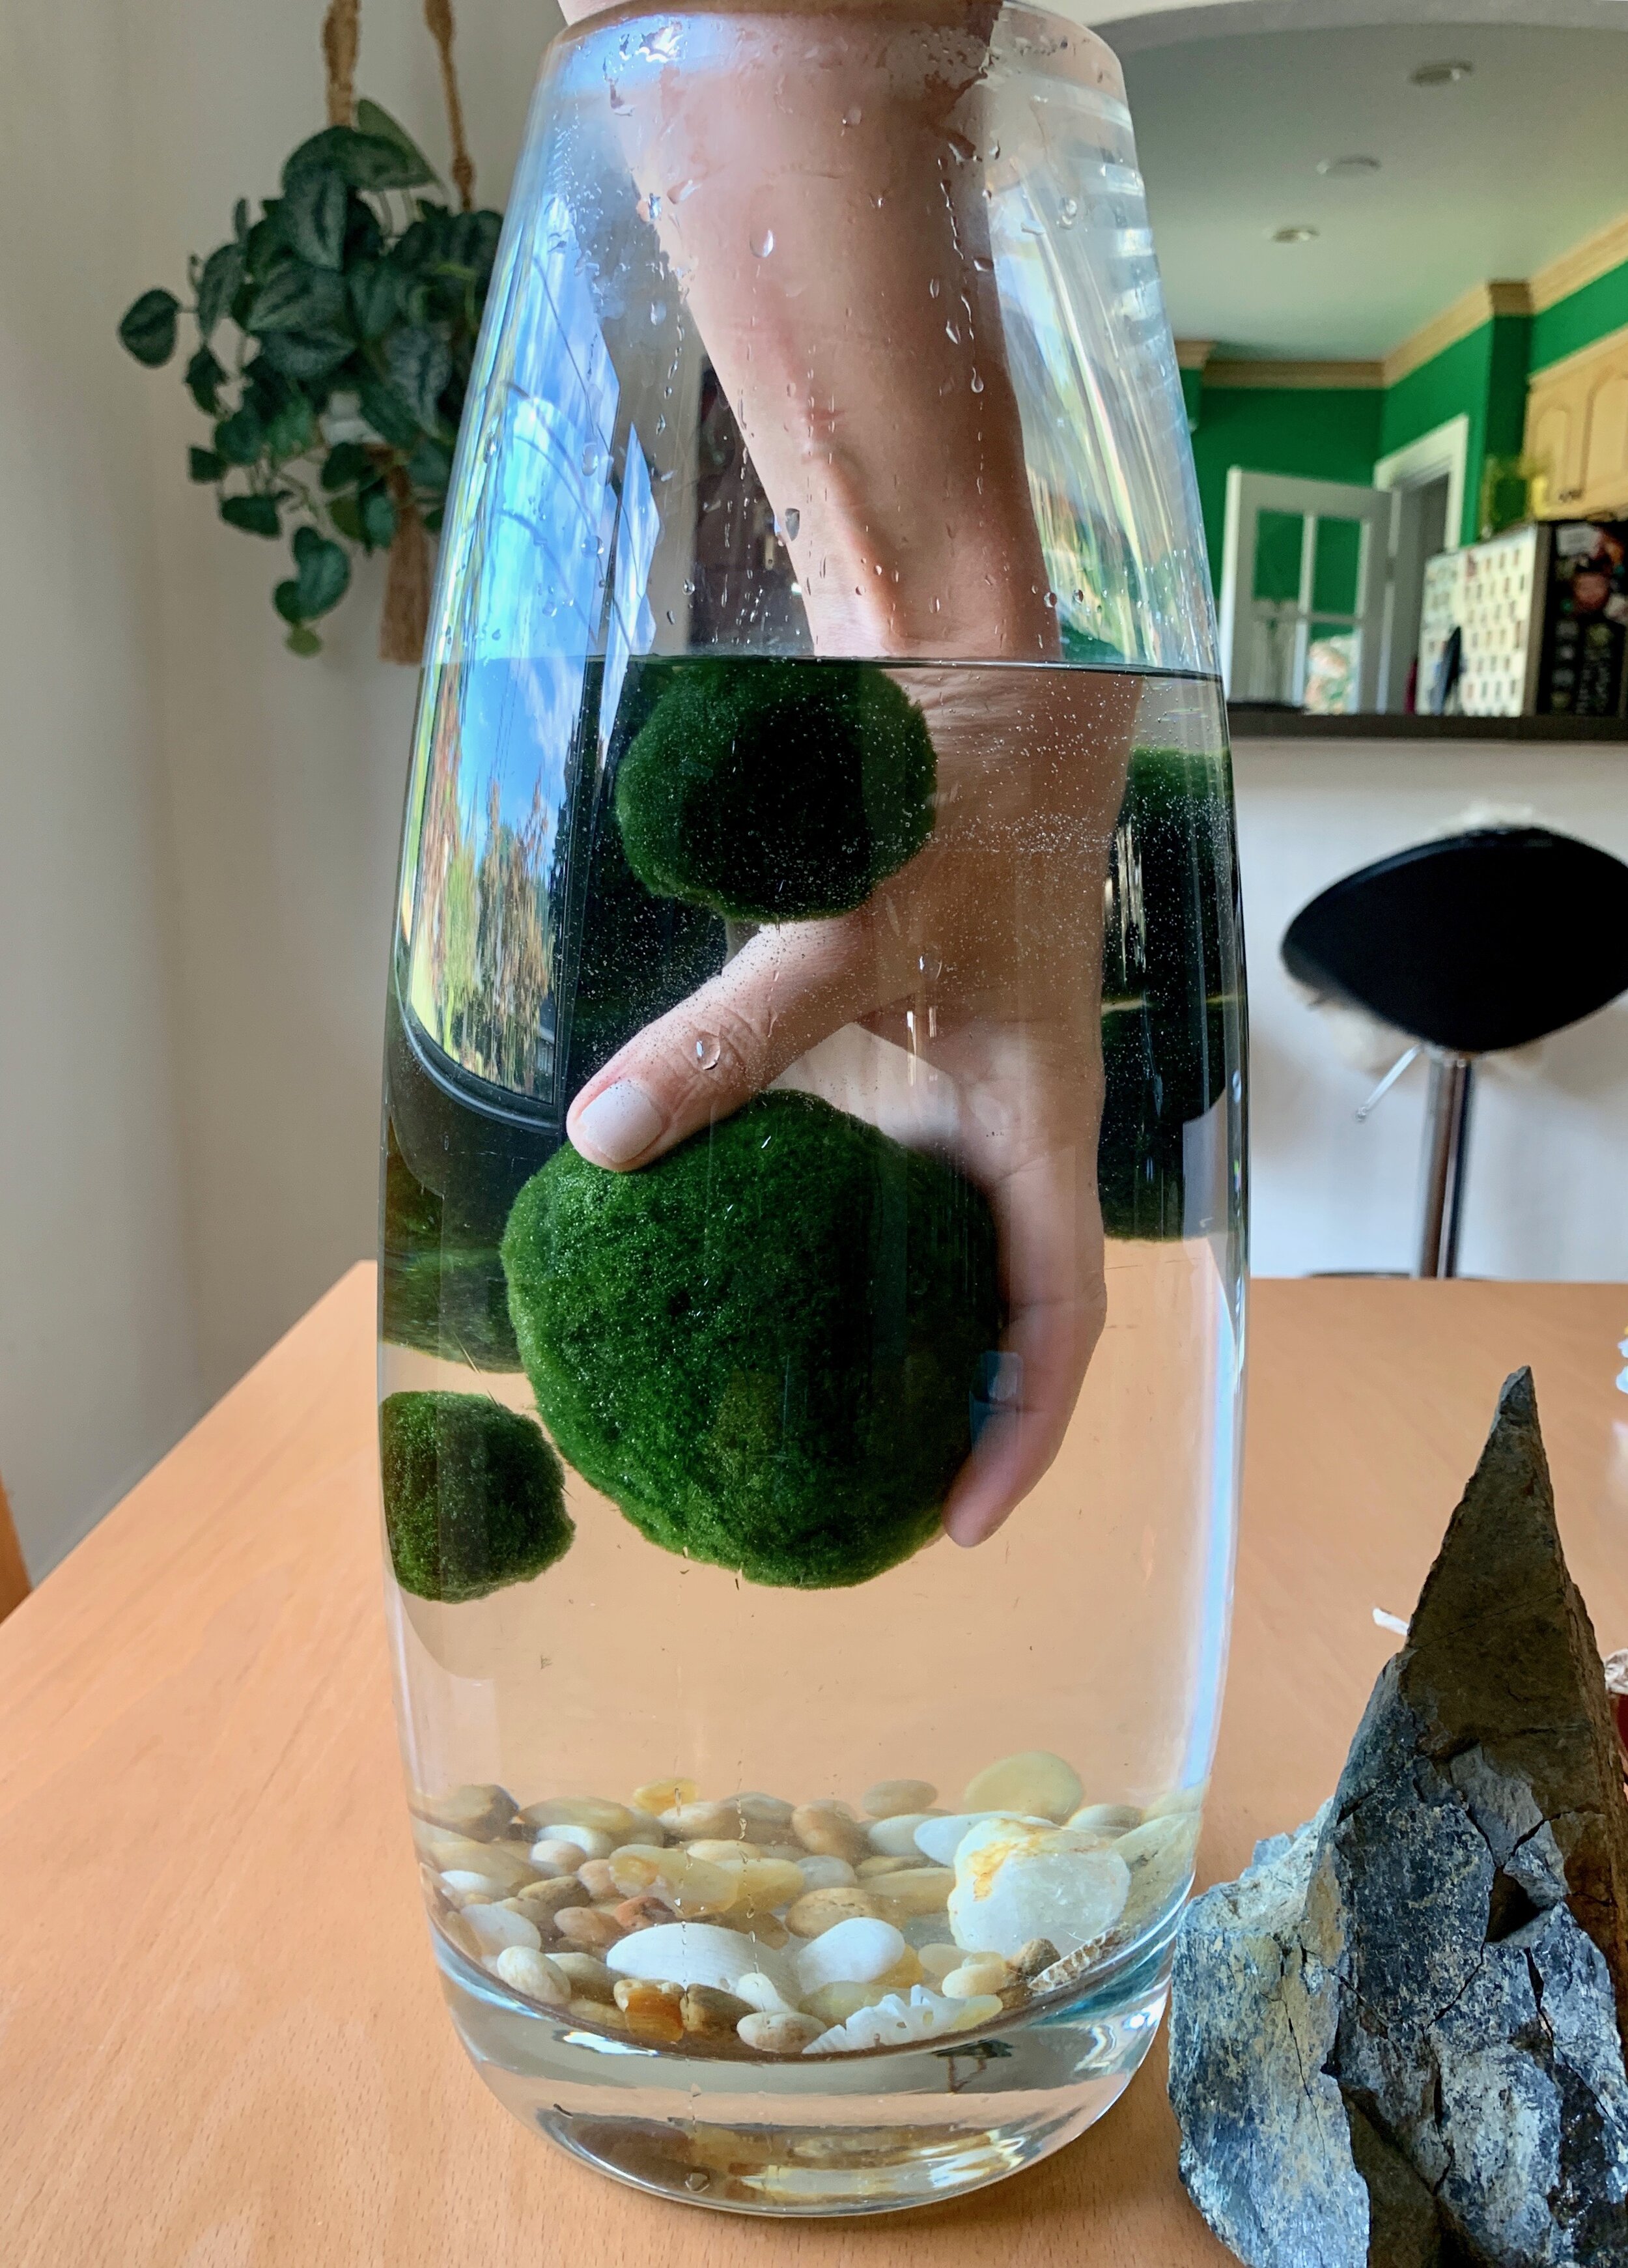 my new marimo moss balls! need advice :) : r/houseplants